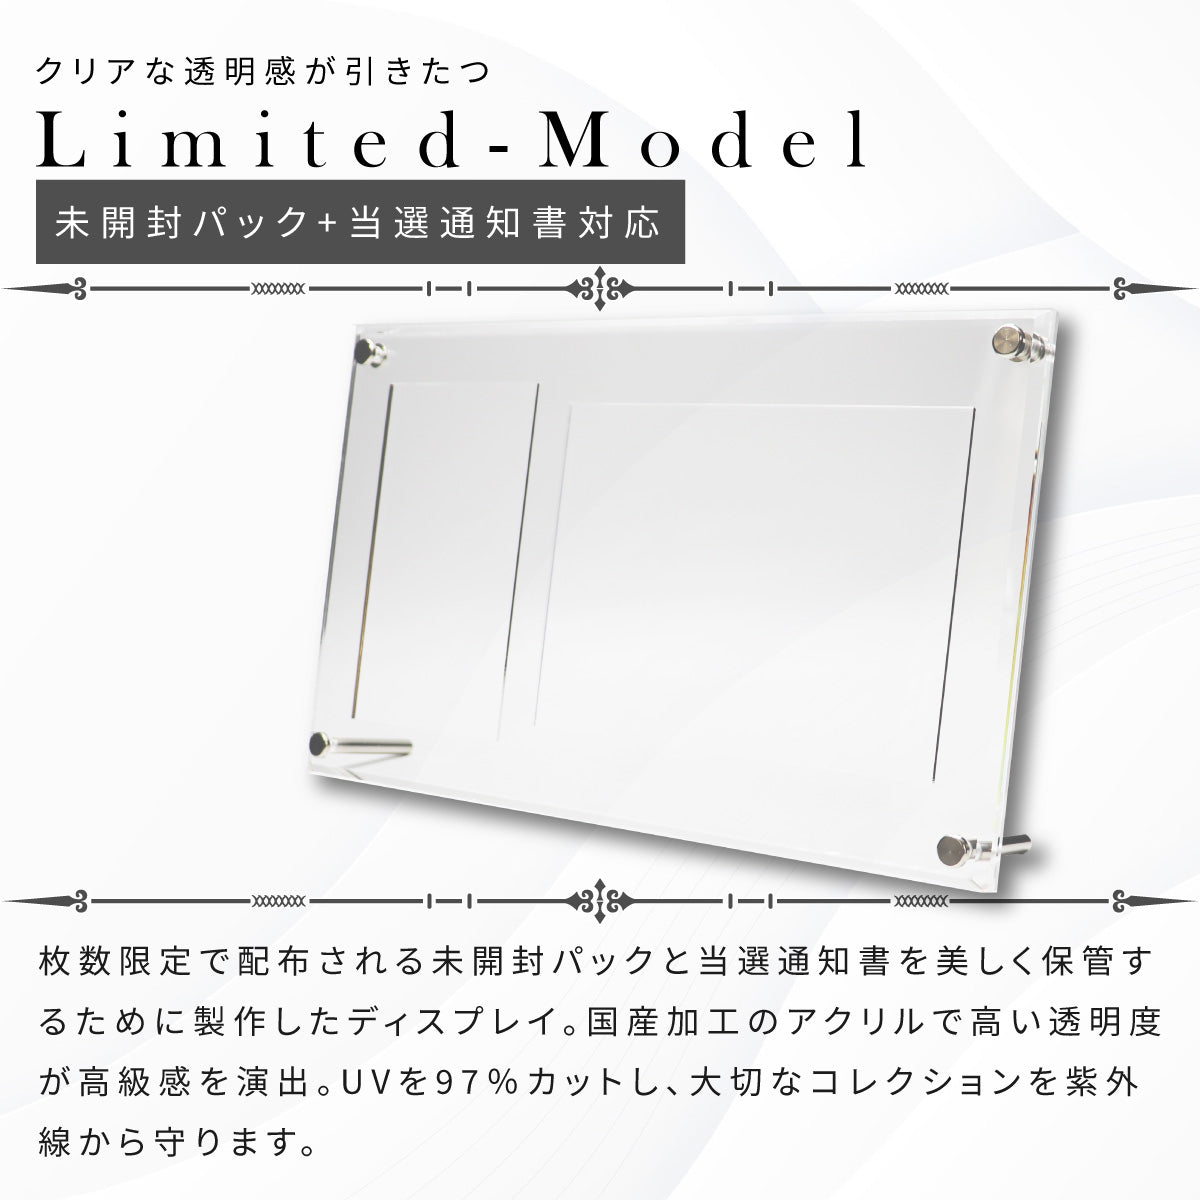 Limited-Model 未開封+当選通知書(遊戯王) – with:D